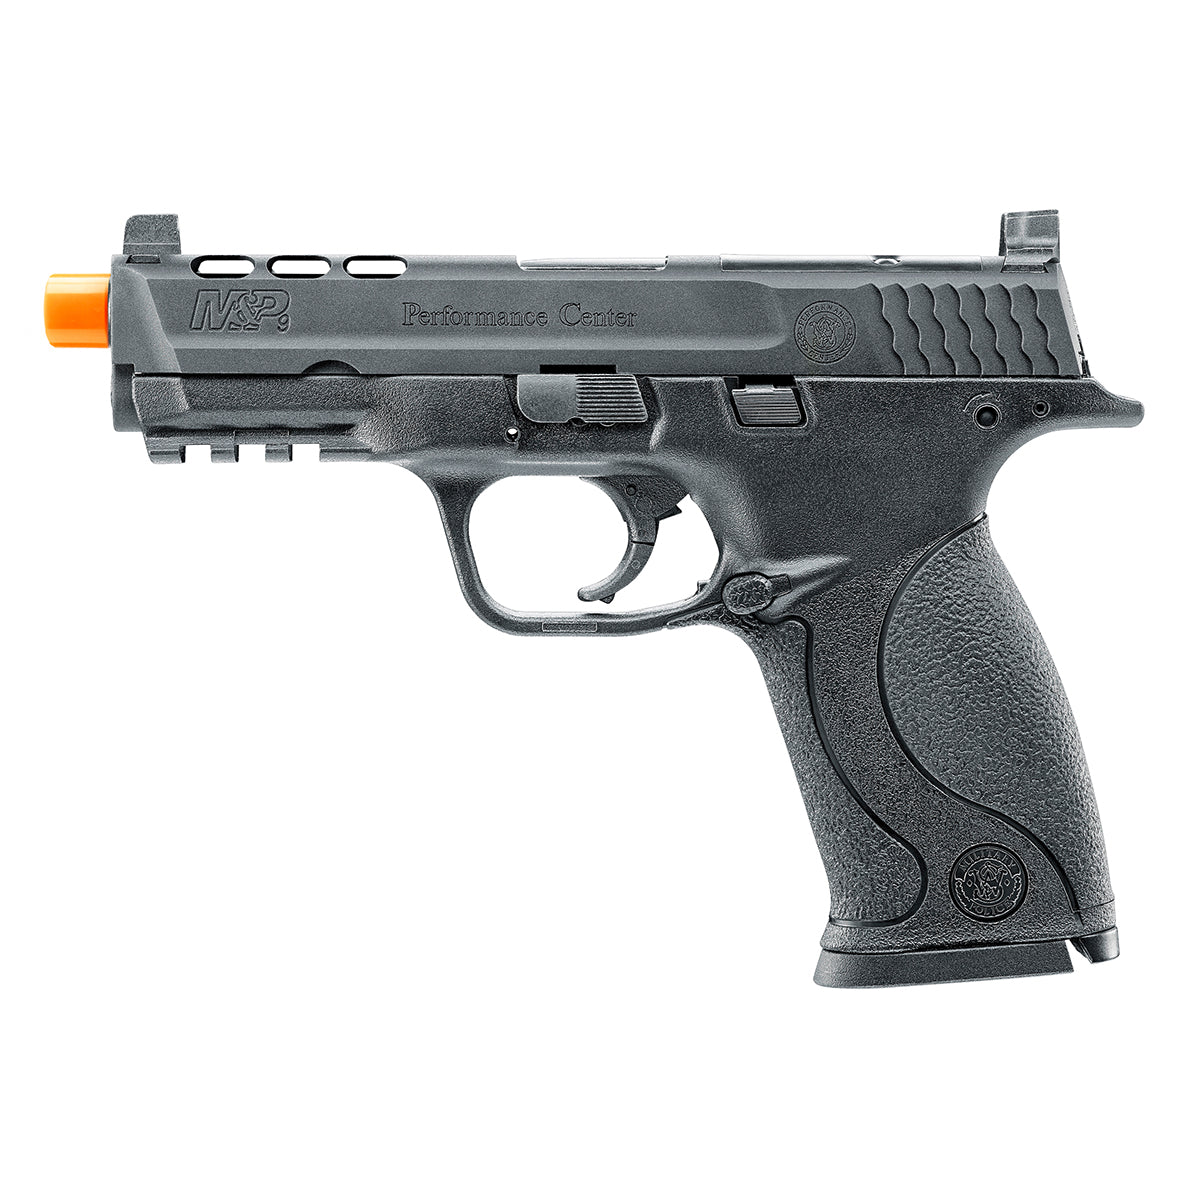 Umarex Smith & Wesson MP9 Performance Center GBB Airsoft Pistol (VFC)